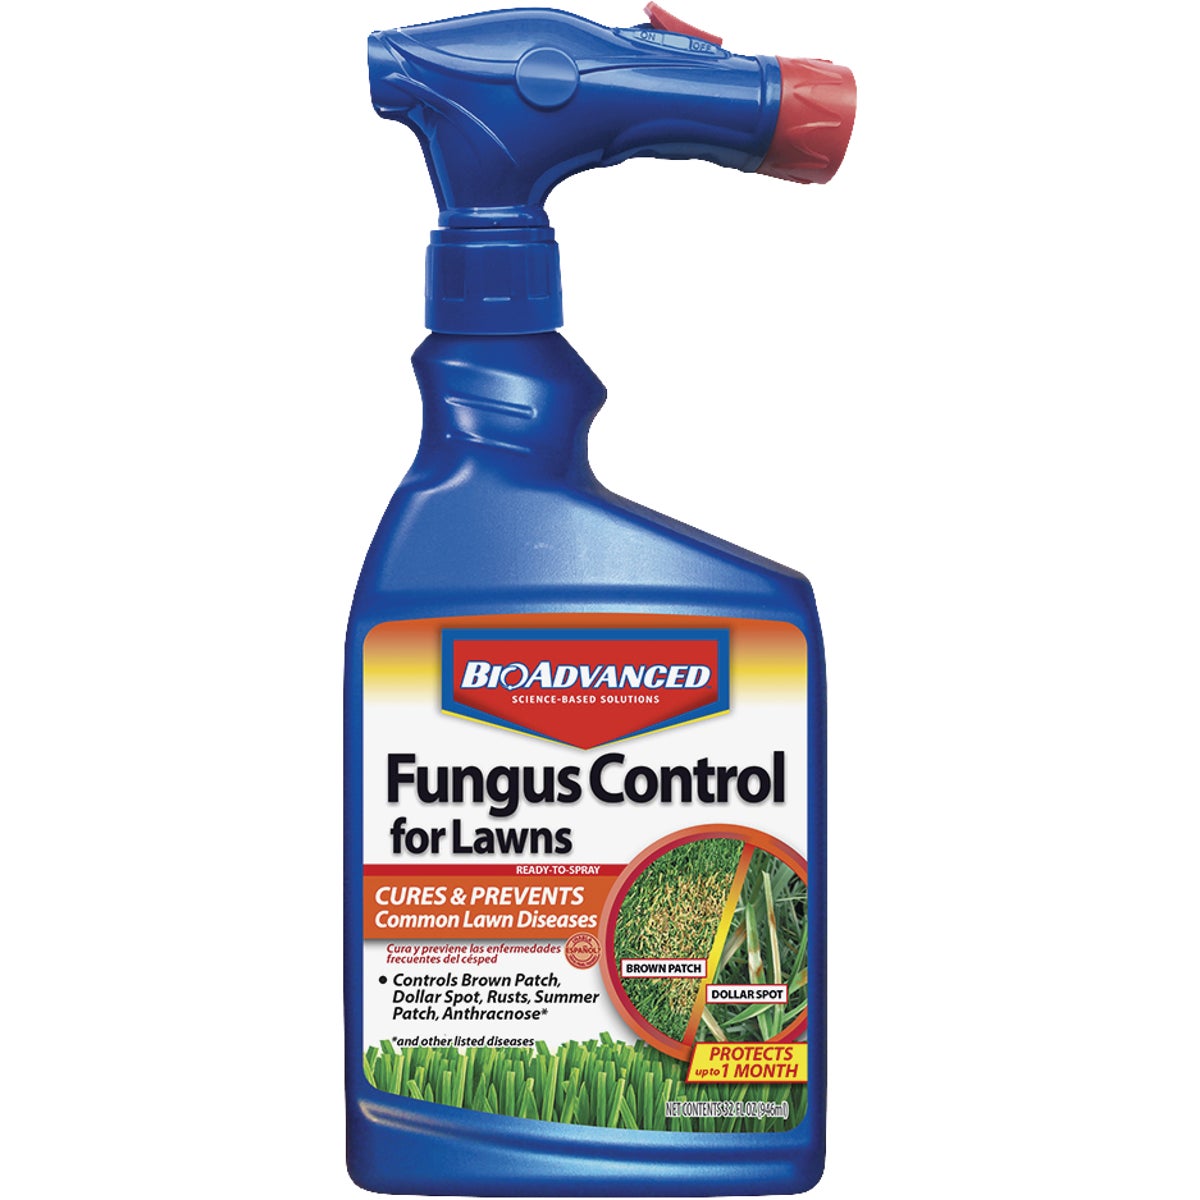 BioAdvanced 32 Oz. Ready To Spray Hose End Fungus Control For Lawns